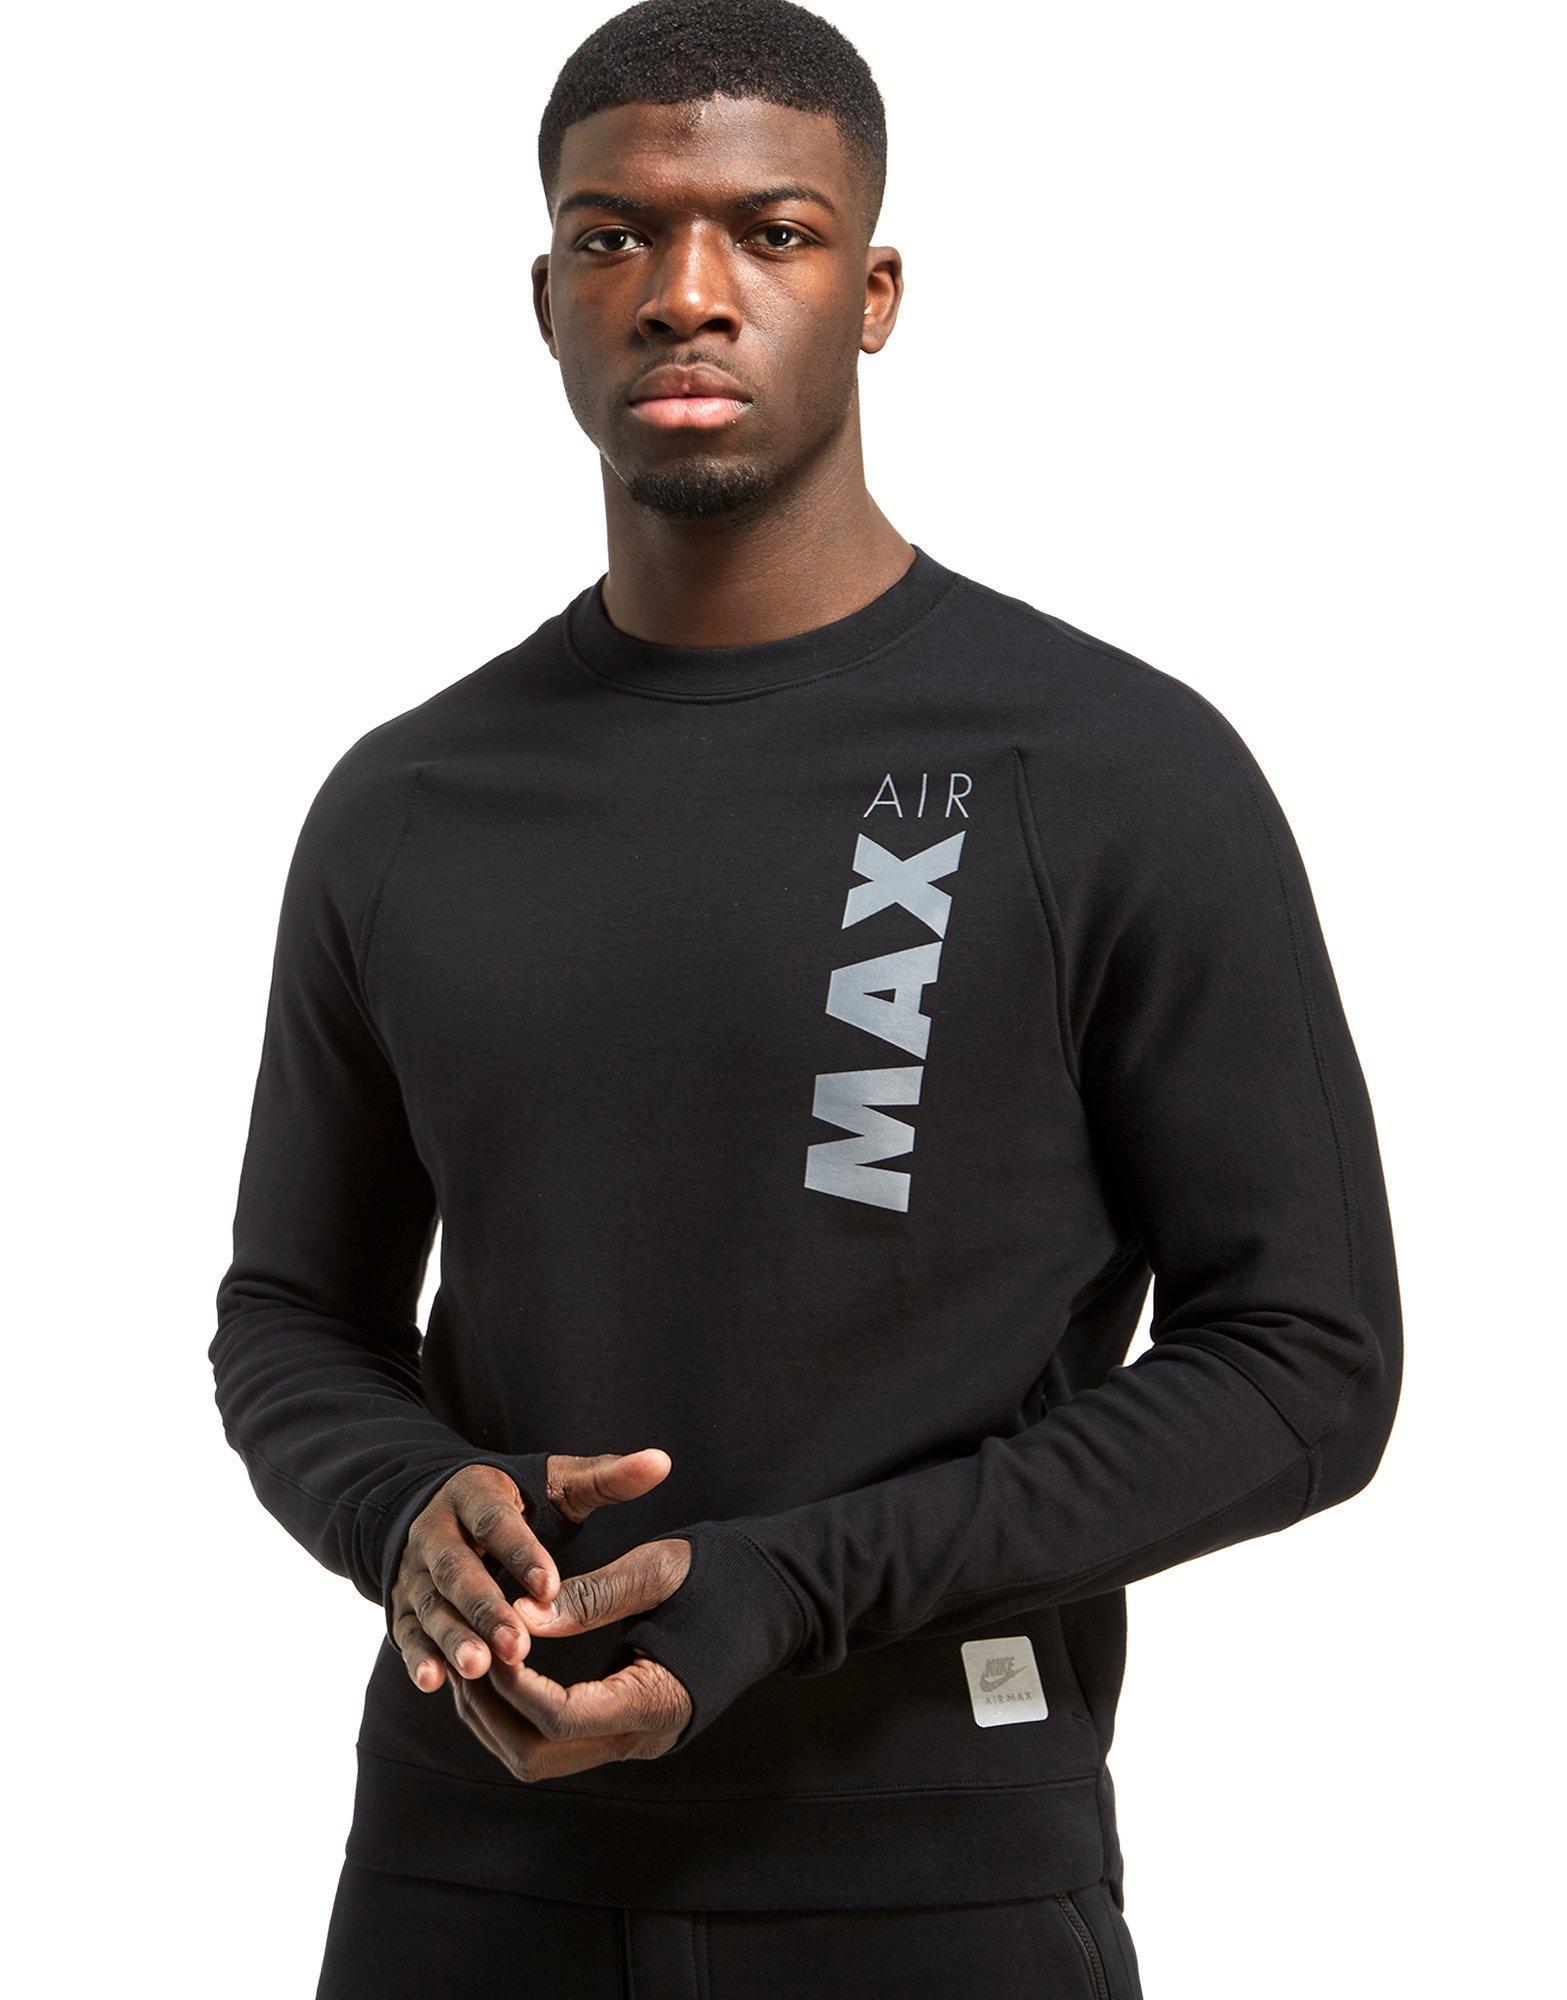 Nike Cotton Air Max Crew Sweatshirt in 